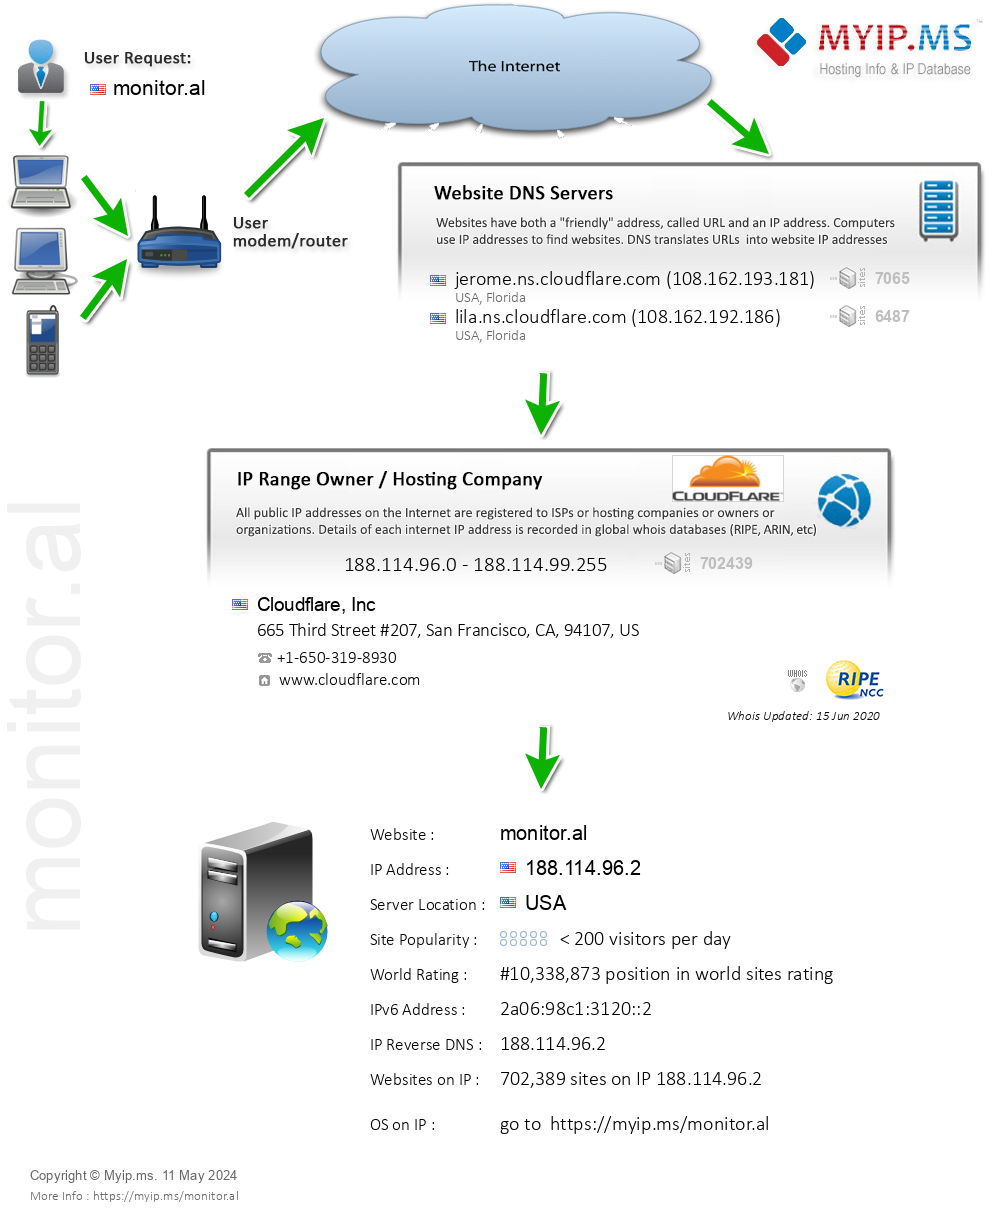 Monitor.al - Website Hosting Visual IP Diagram